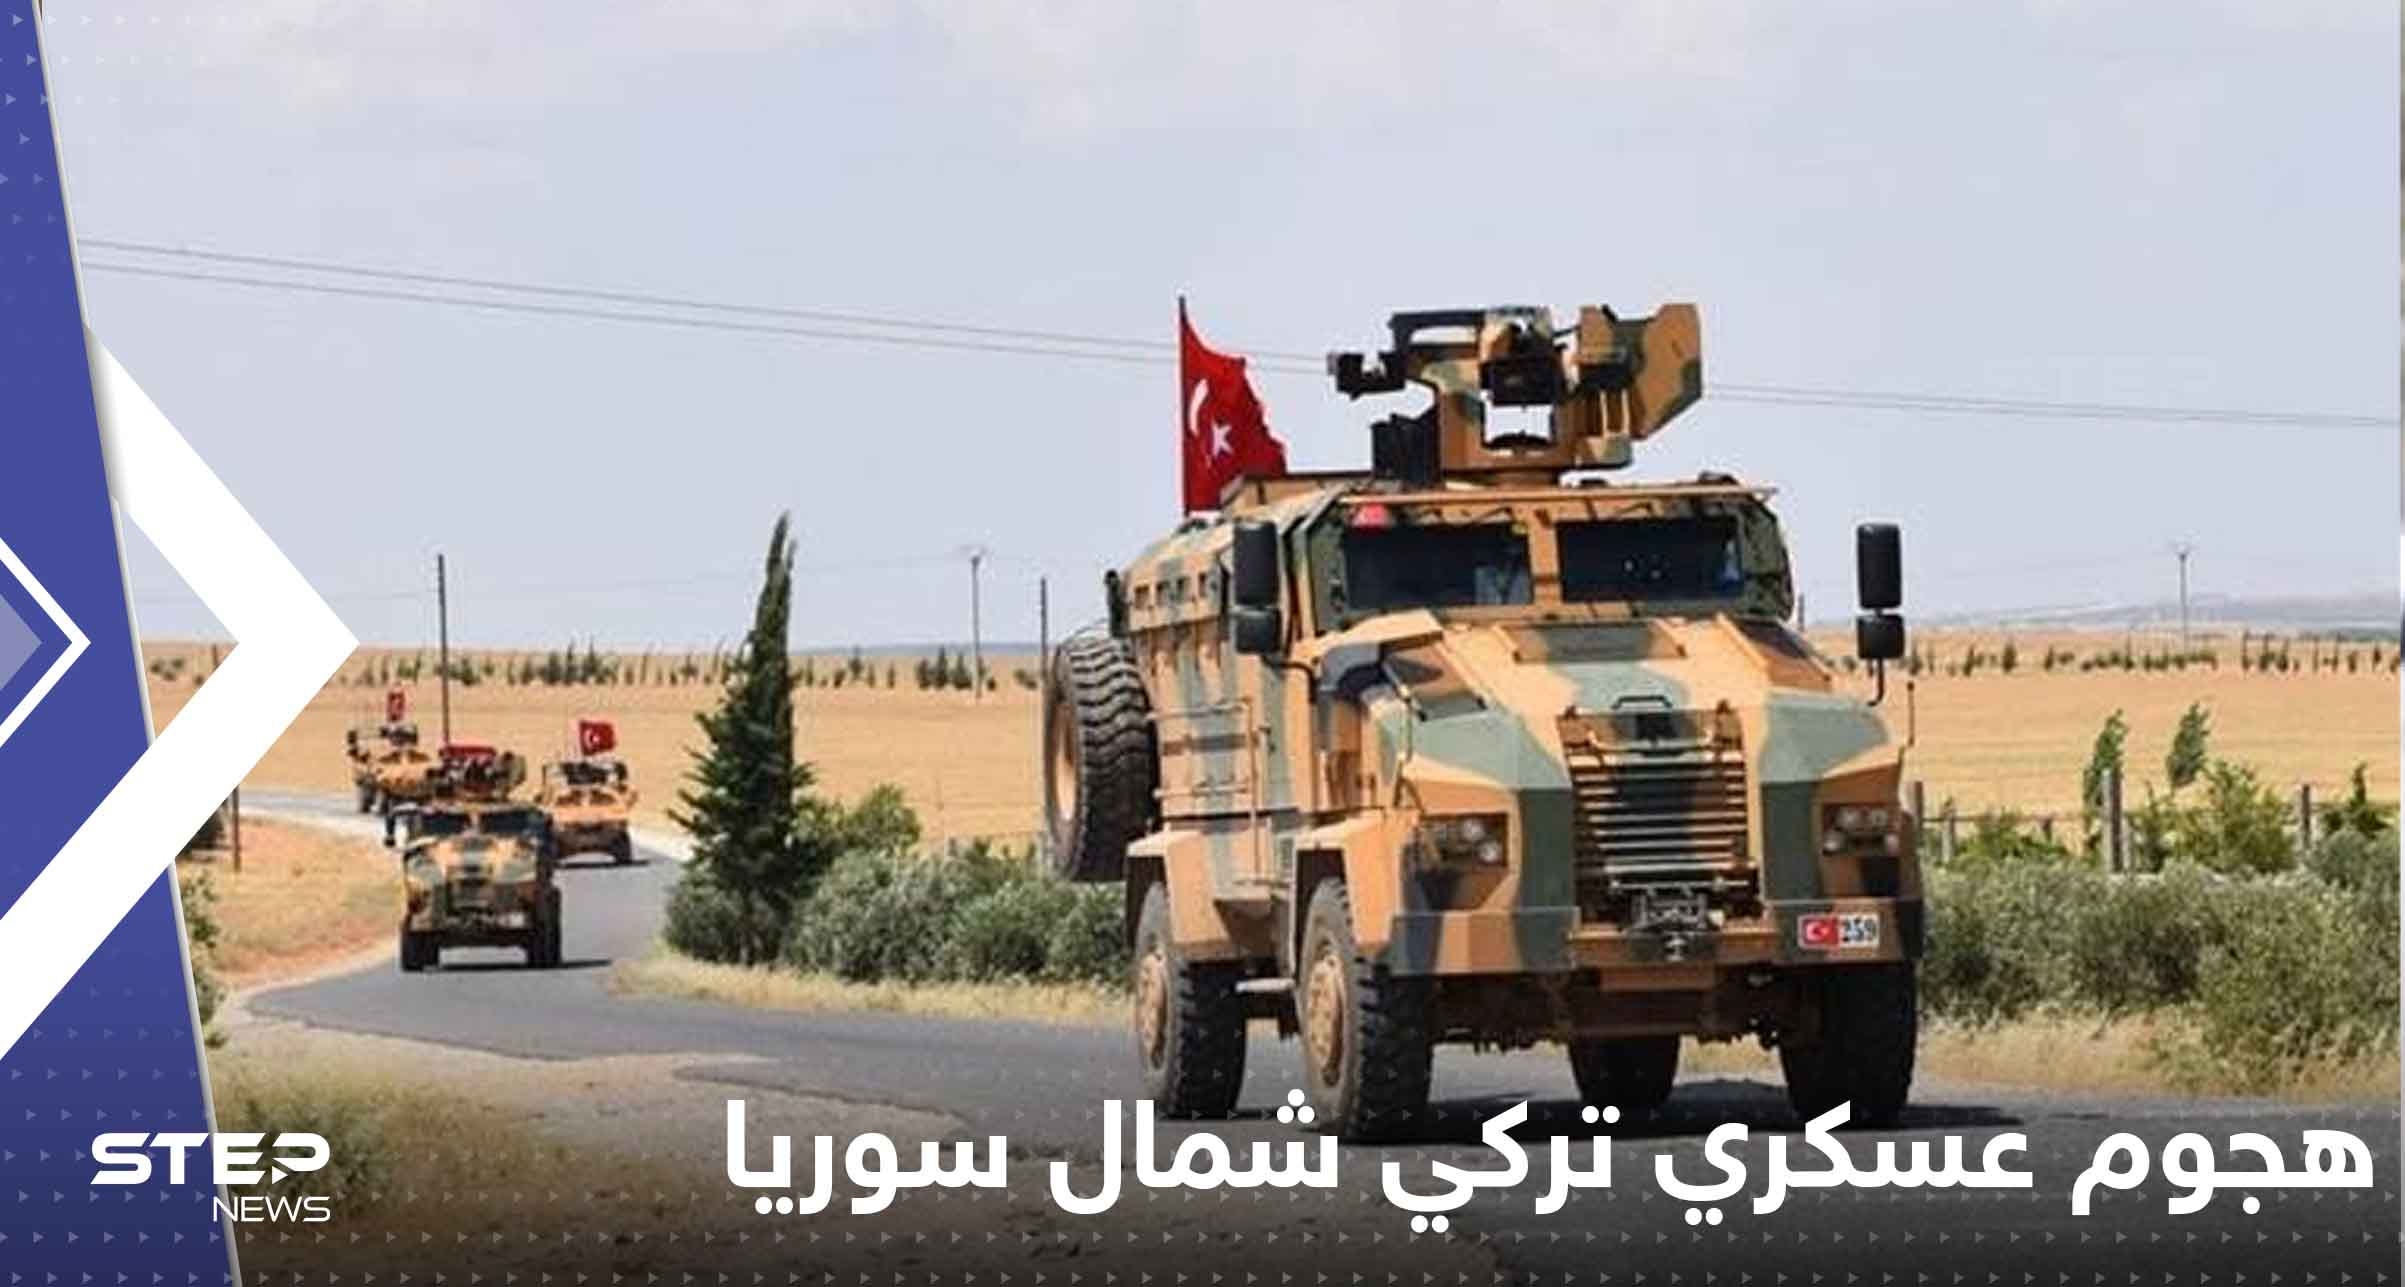 قائد "قسد" يتوقع هجوماً عسكرياً تركياً شمال سوريا ويحدد موعده